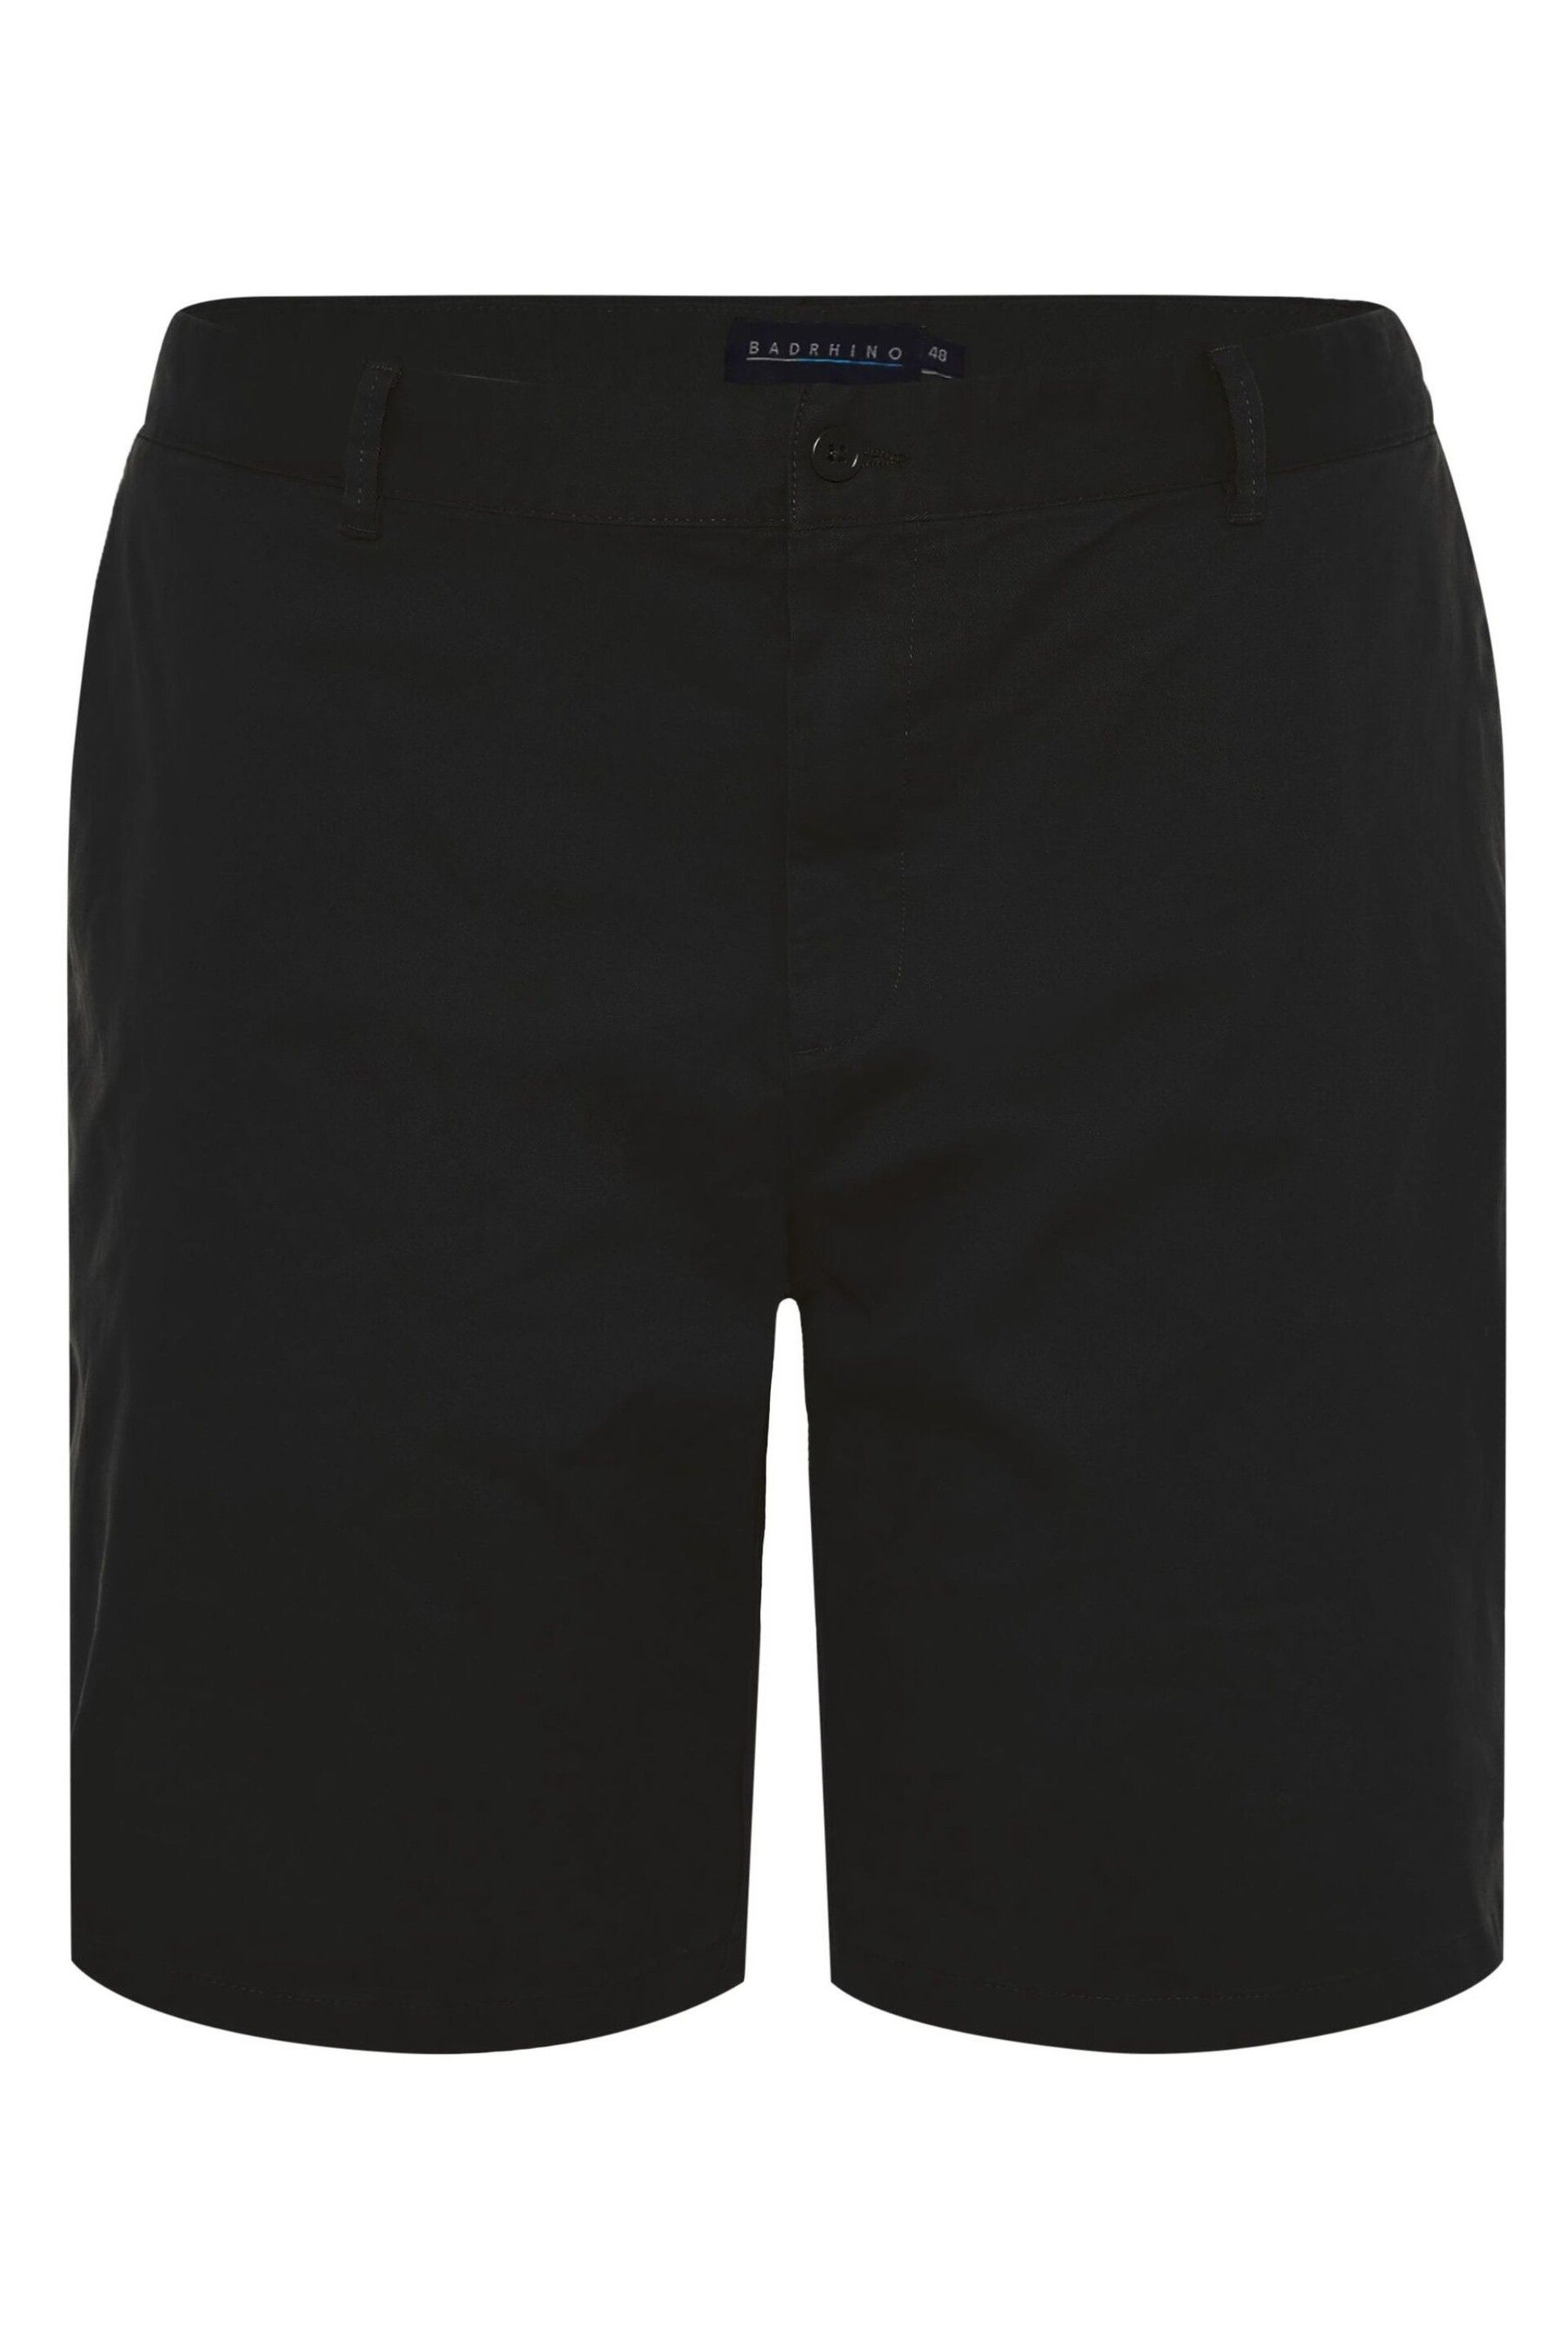 BadRhino Big & Tall Black Stretch Chino Shorts - Image 5 of 5